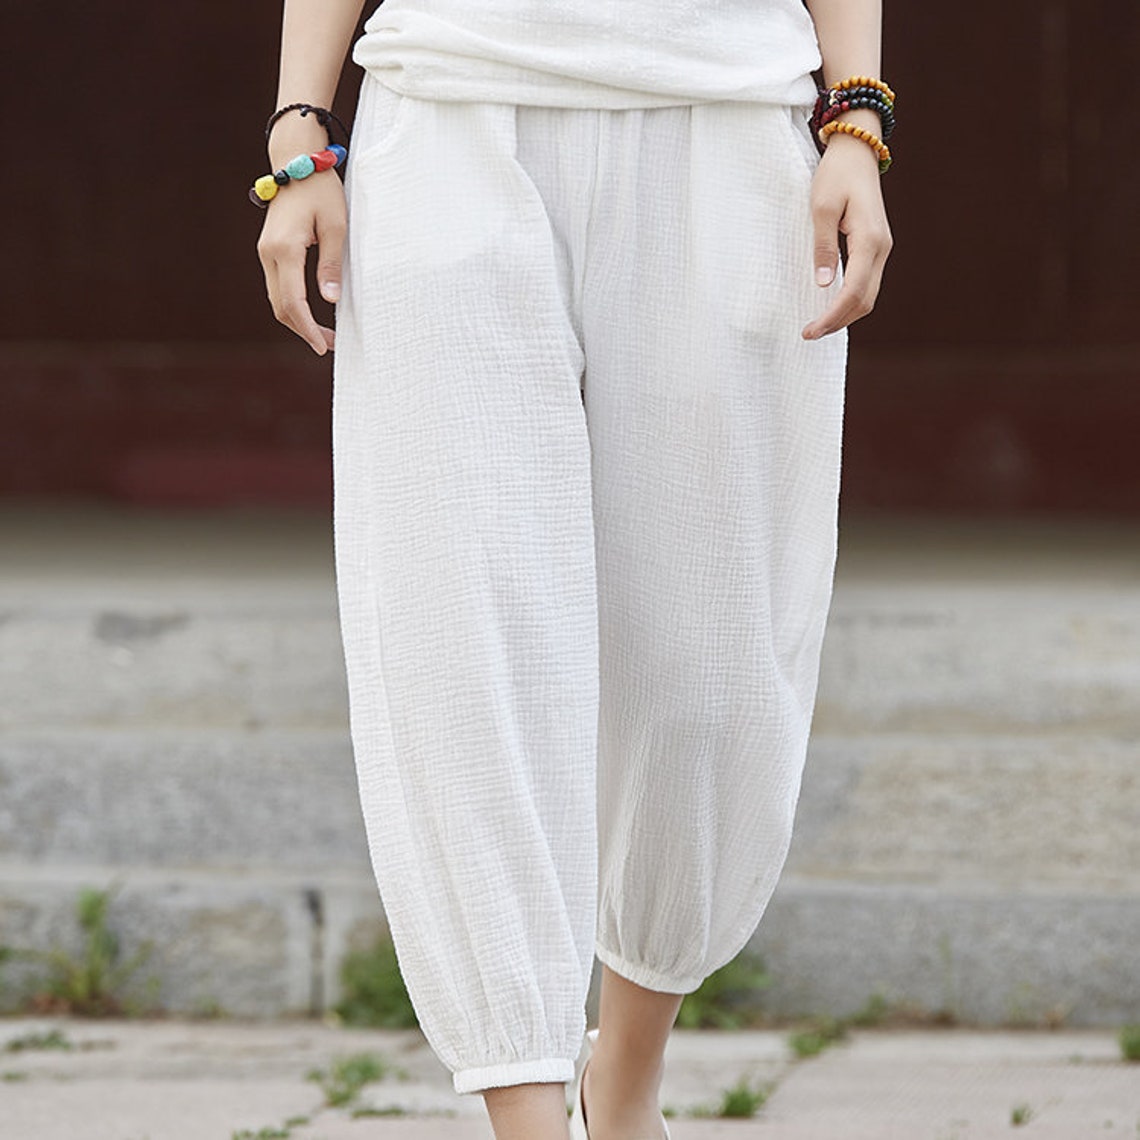 Linen pants/women's summer linen 7 points shorts | Etsy